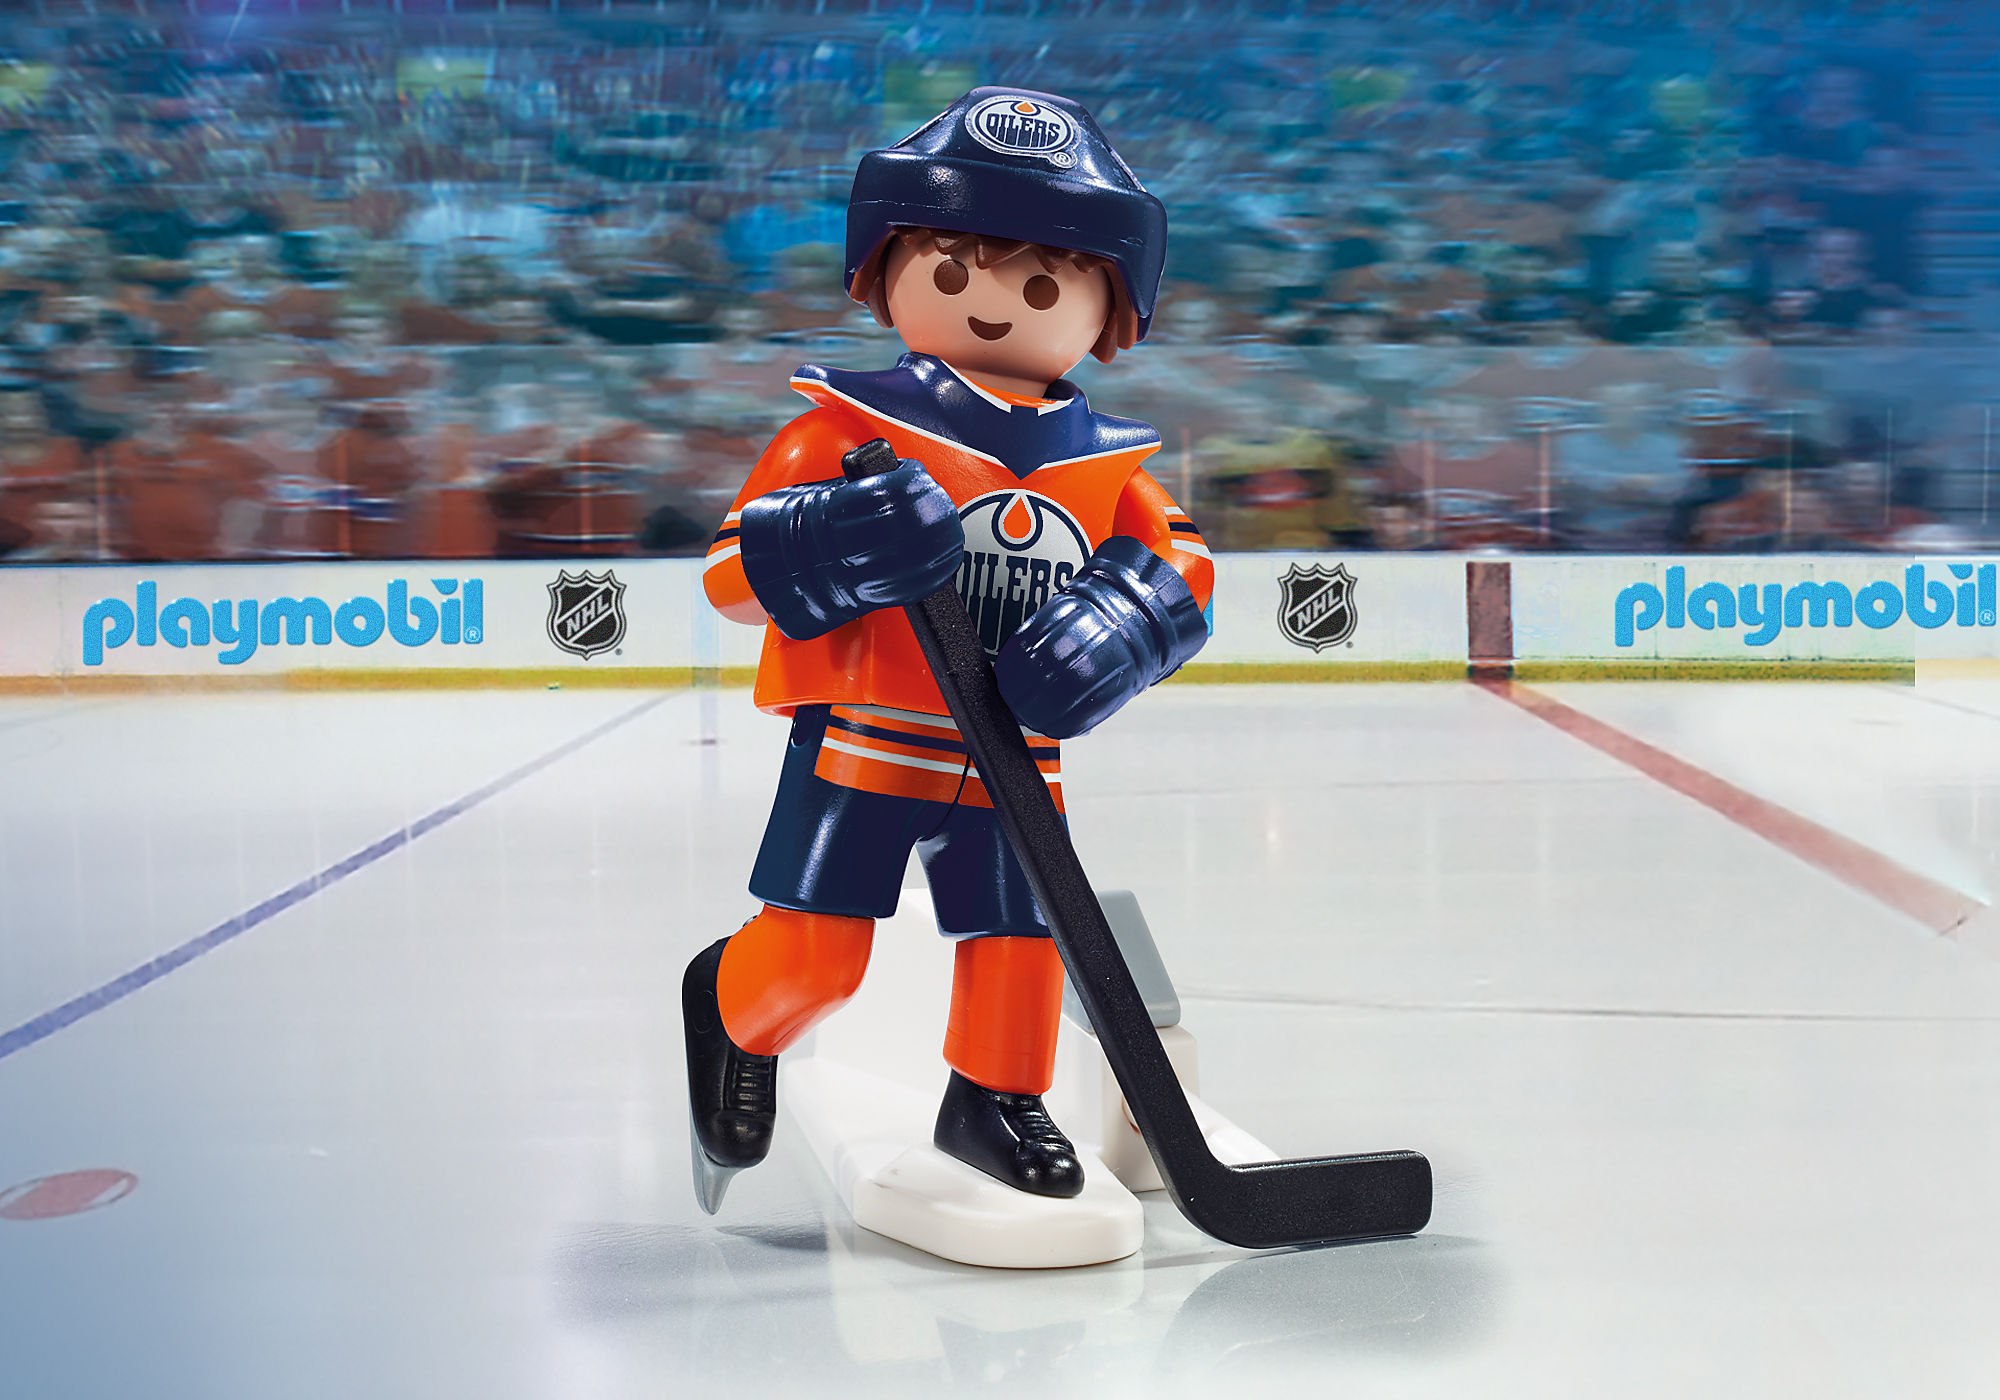  Playmobil NHL New Jersey Devils Goalie Figure : Sports